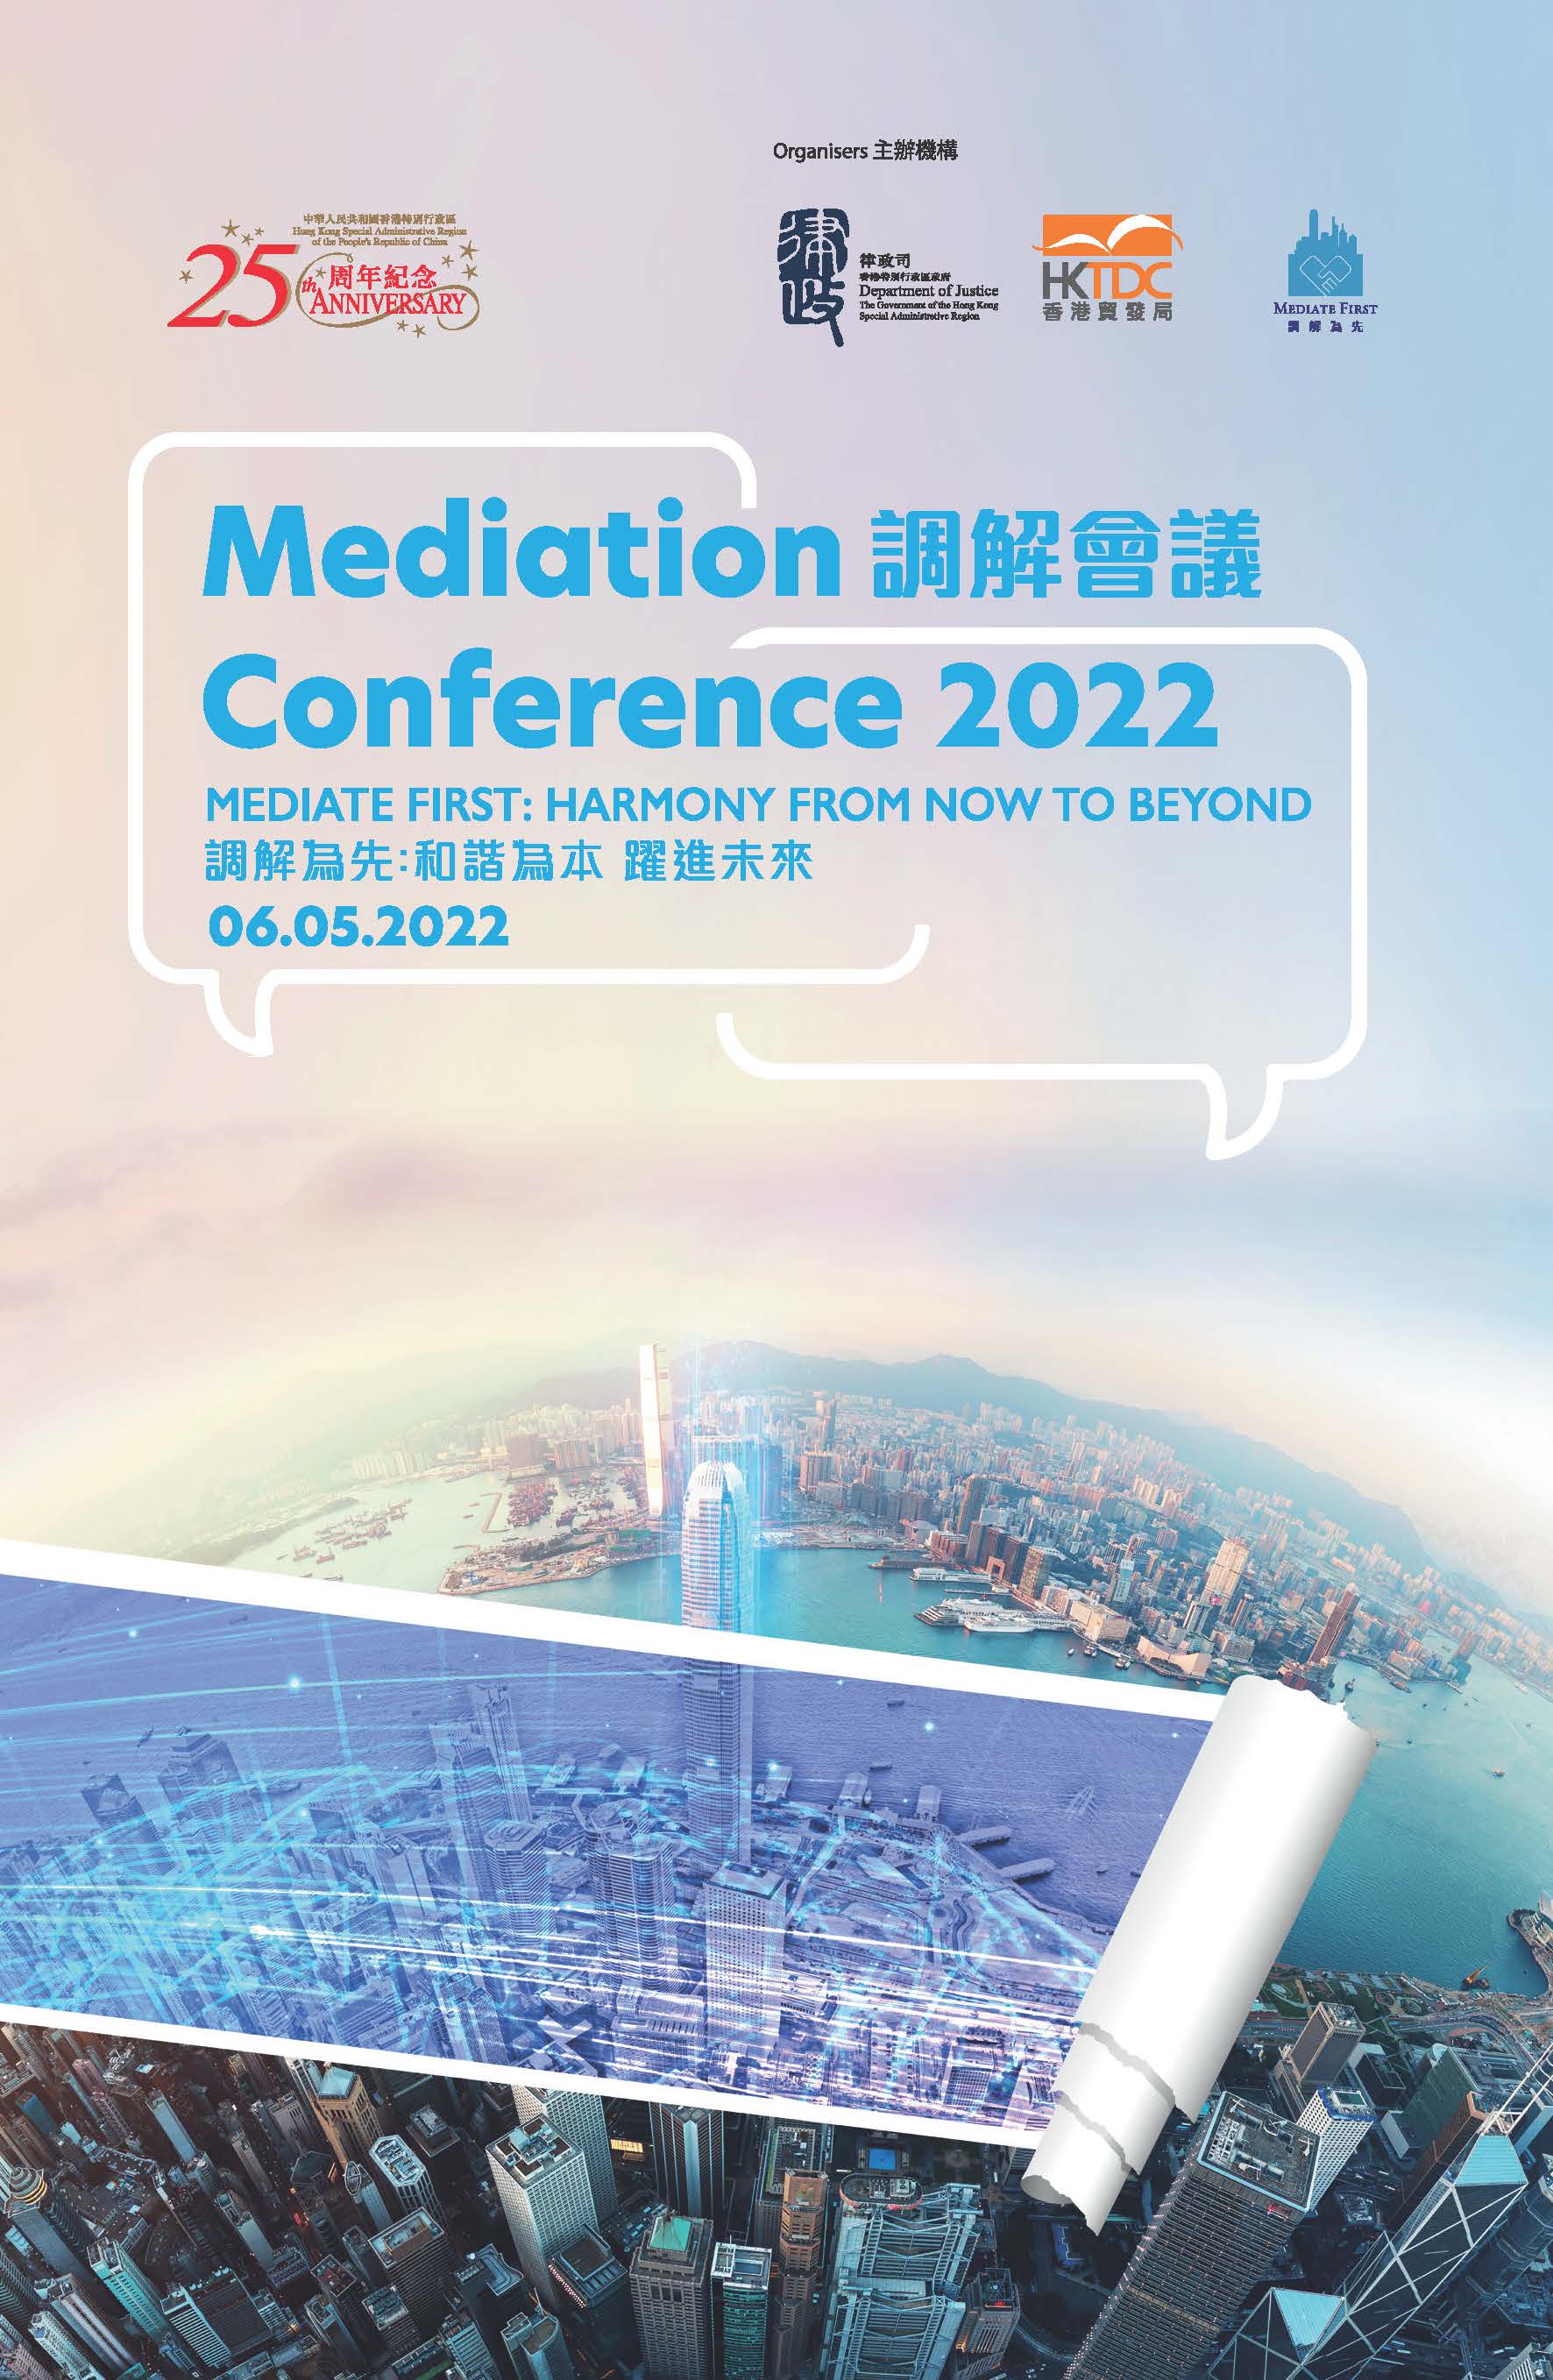 Mediation Conference 2022